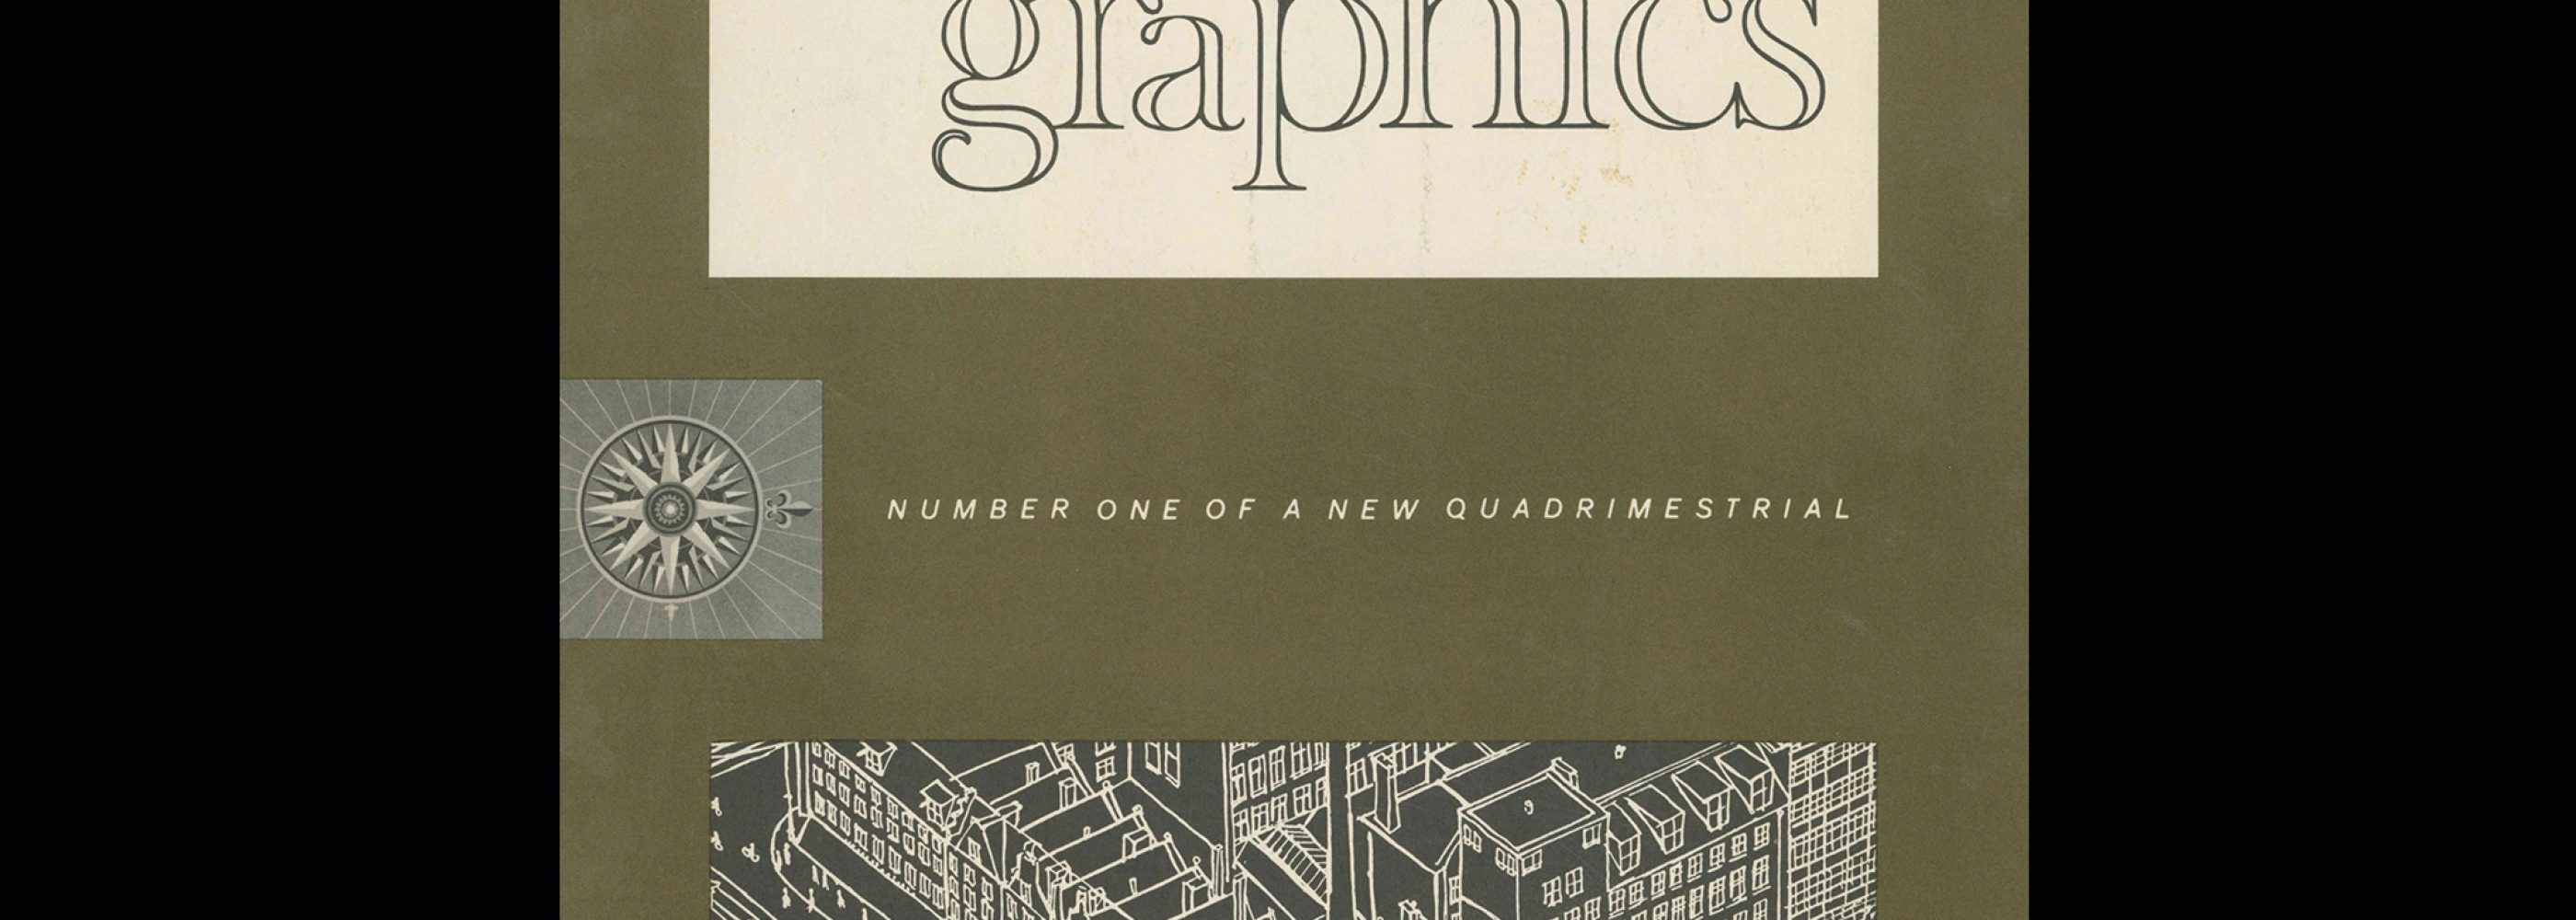 World Graphics, Issue 1, 1962